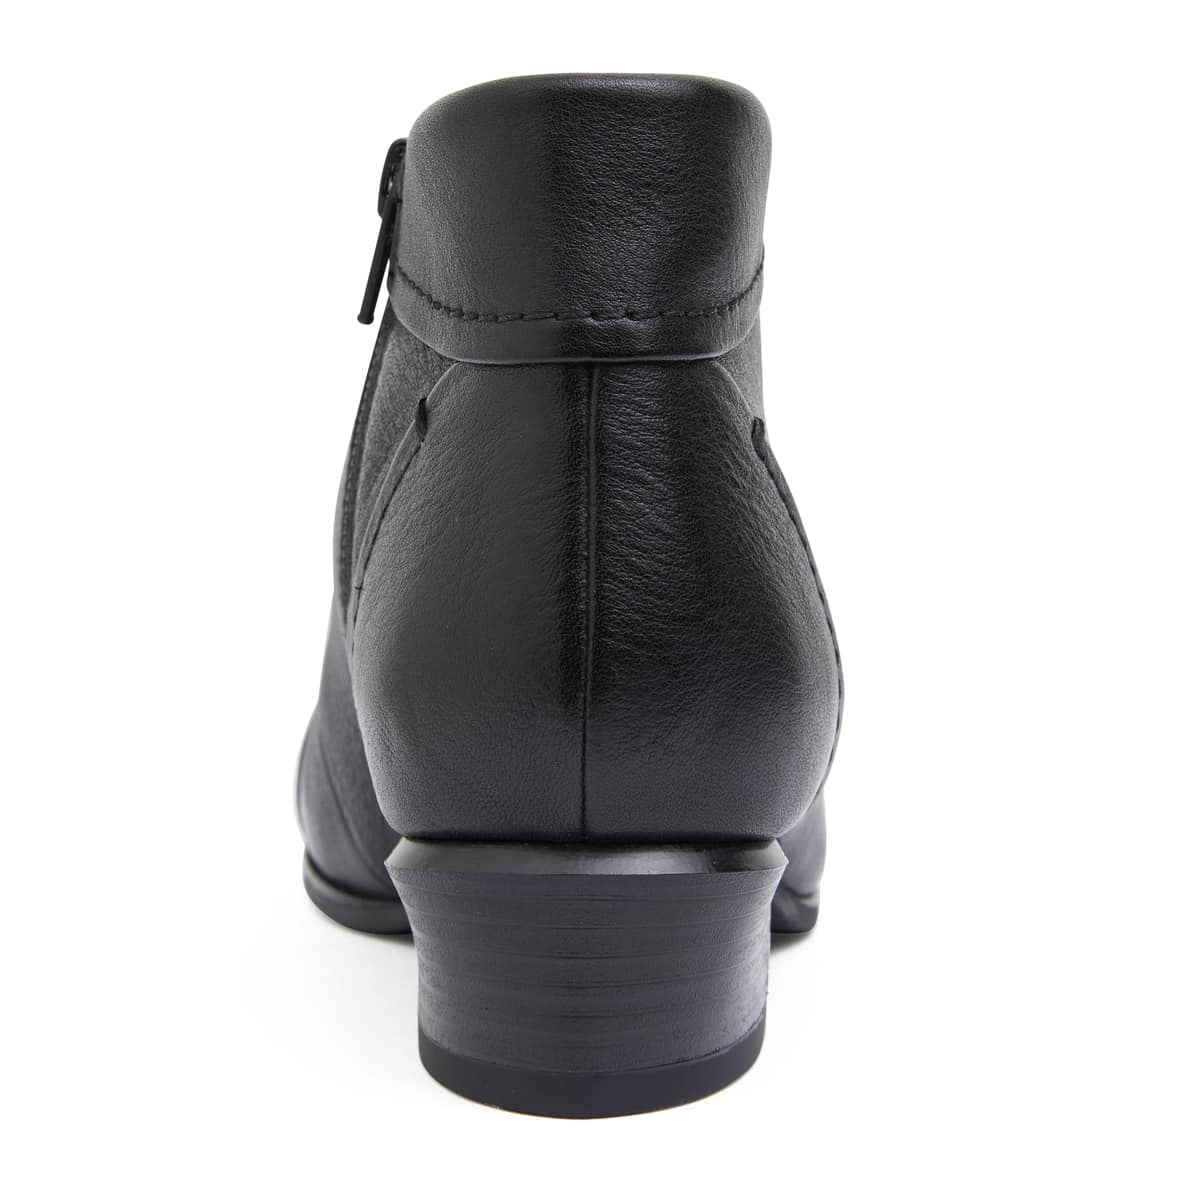 Takoda Boot in Black Leather